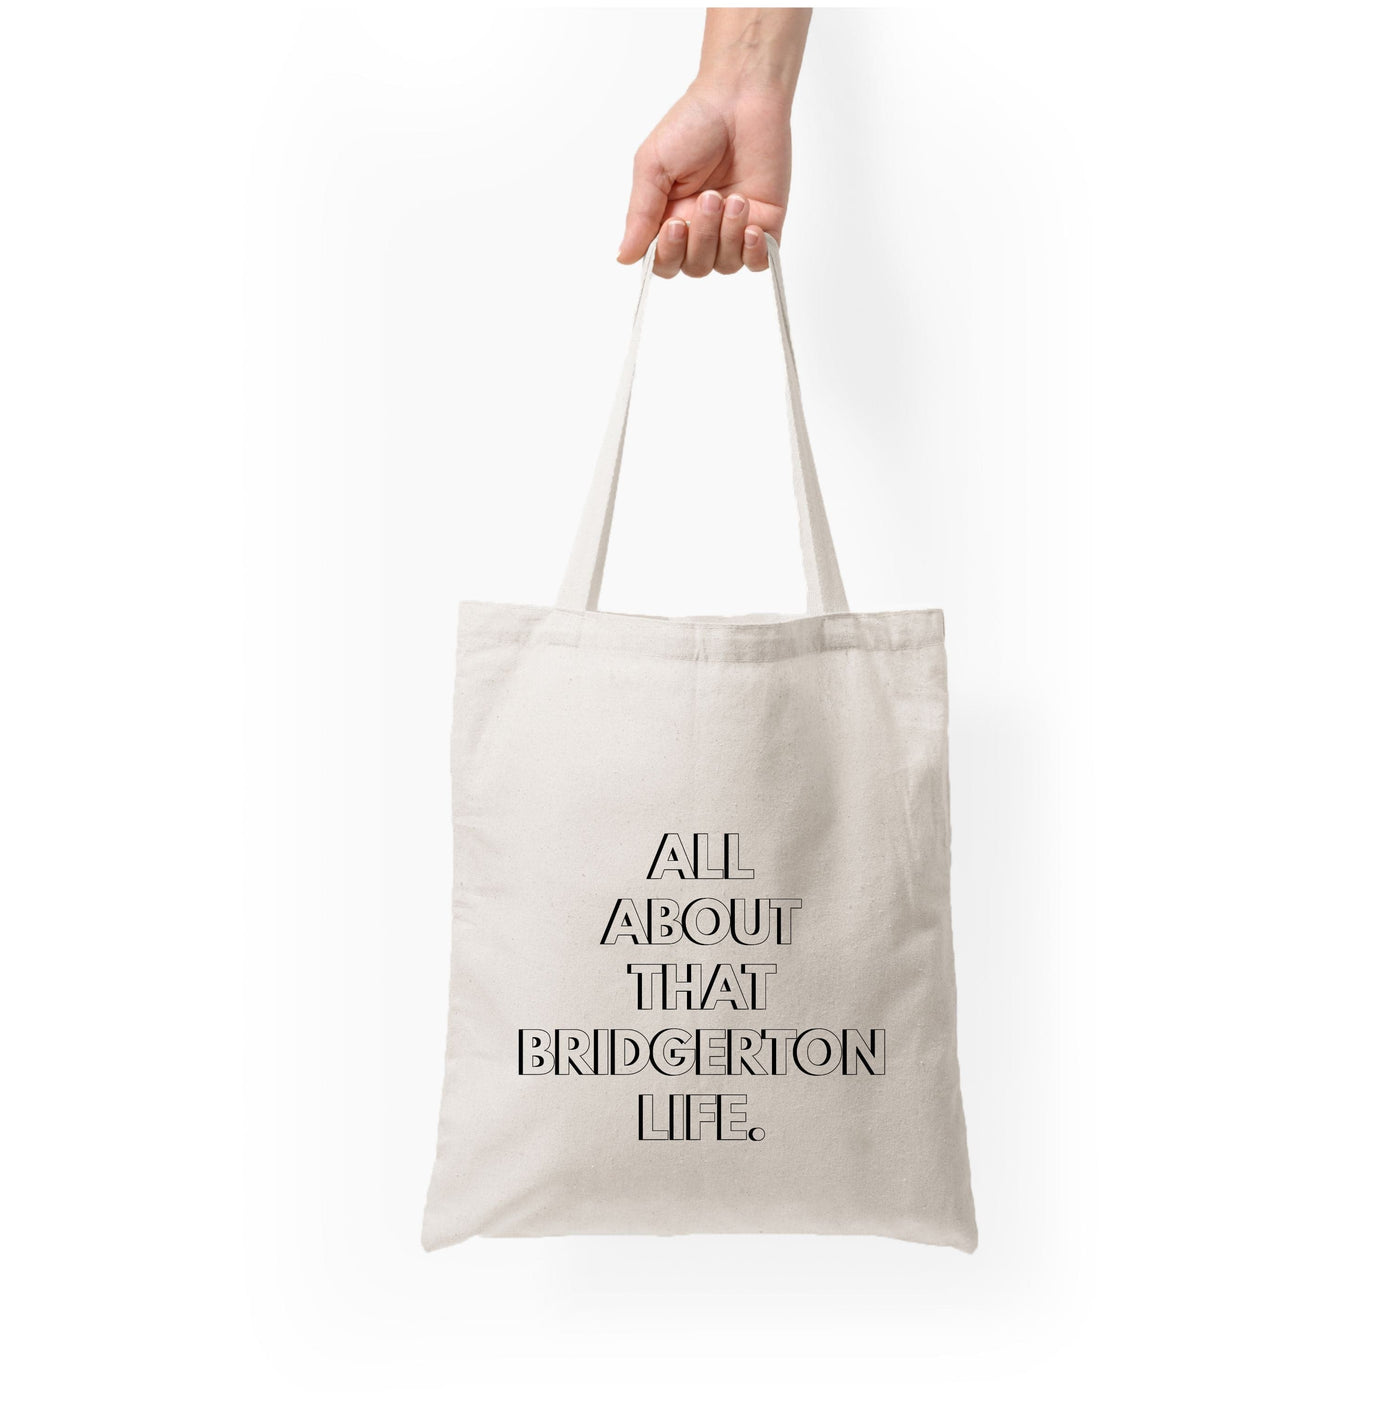 All About That Bridgerton Life - Bridgerton Tote Bag